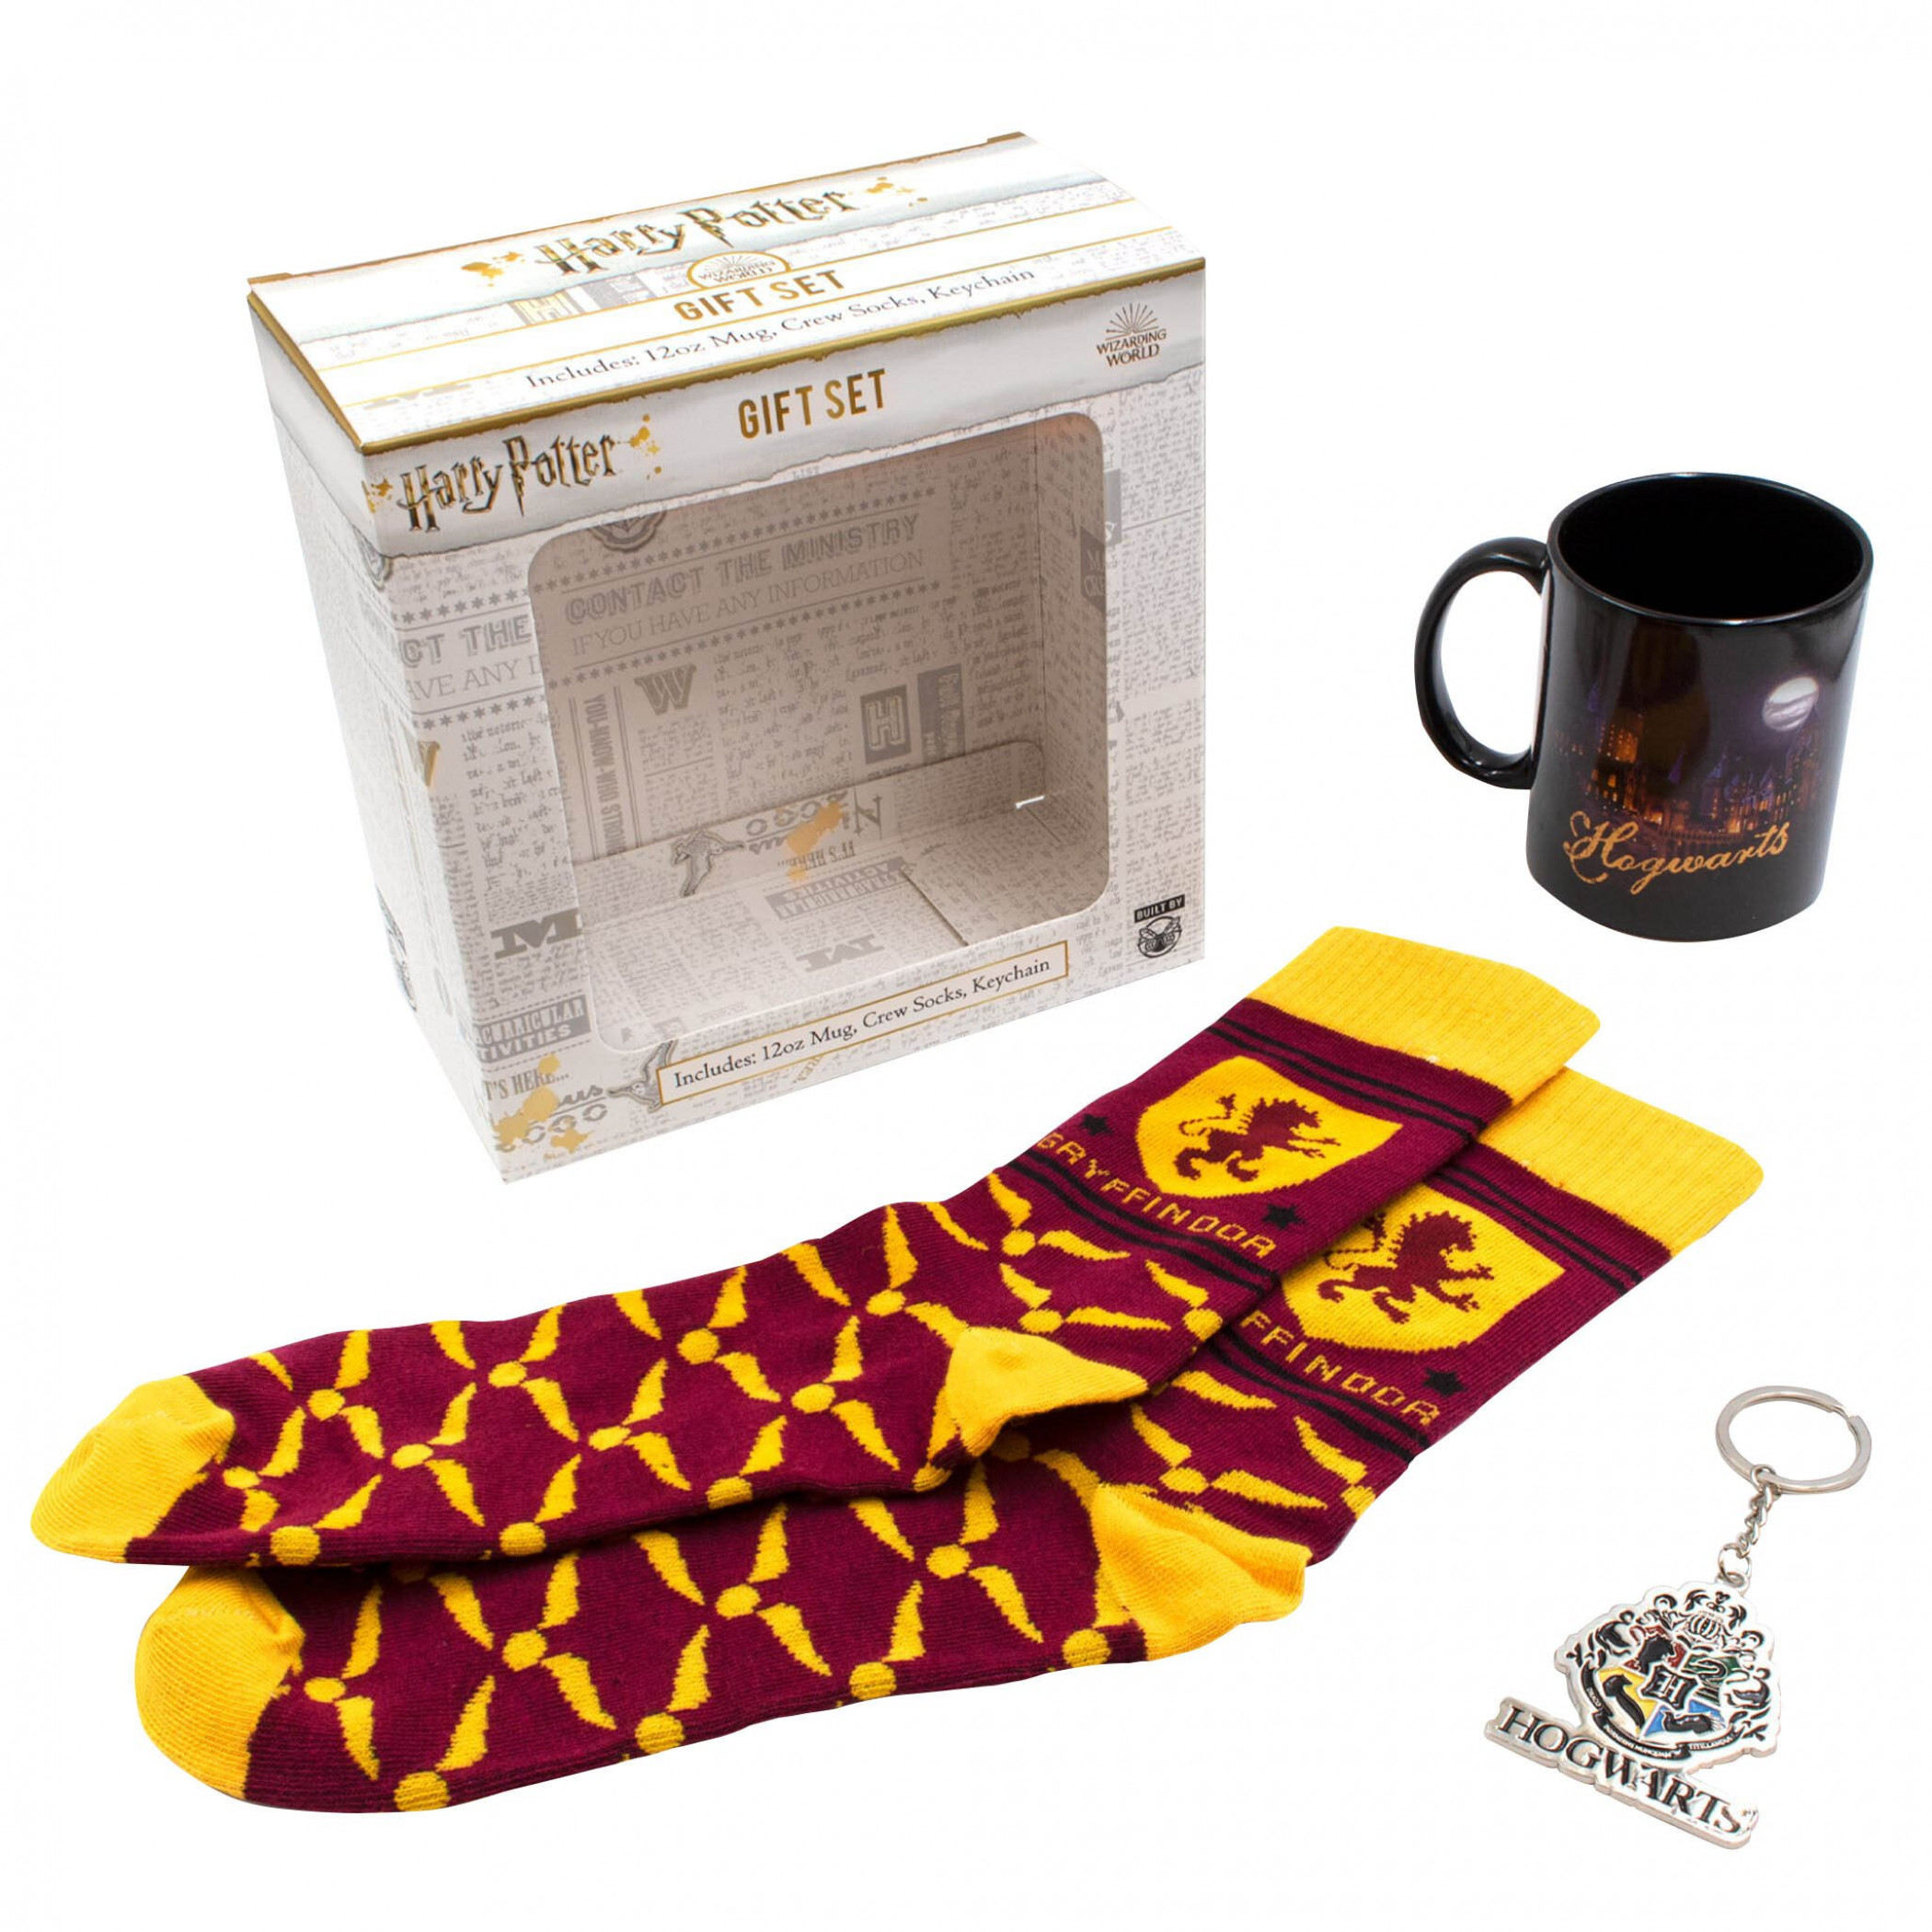 Harry Potter Hogwarts and Gryffindor Accessory Gift Set